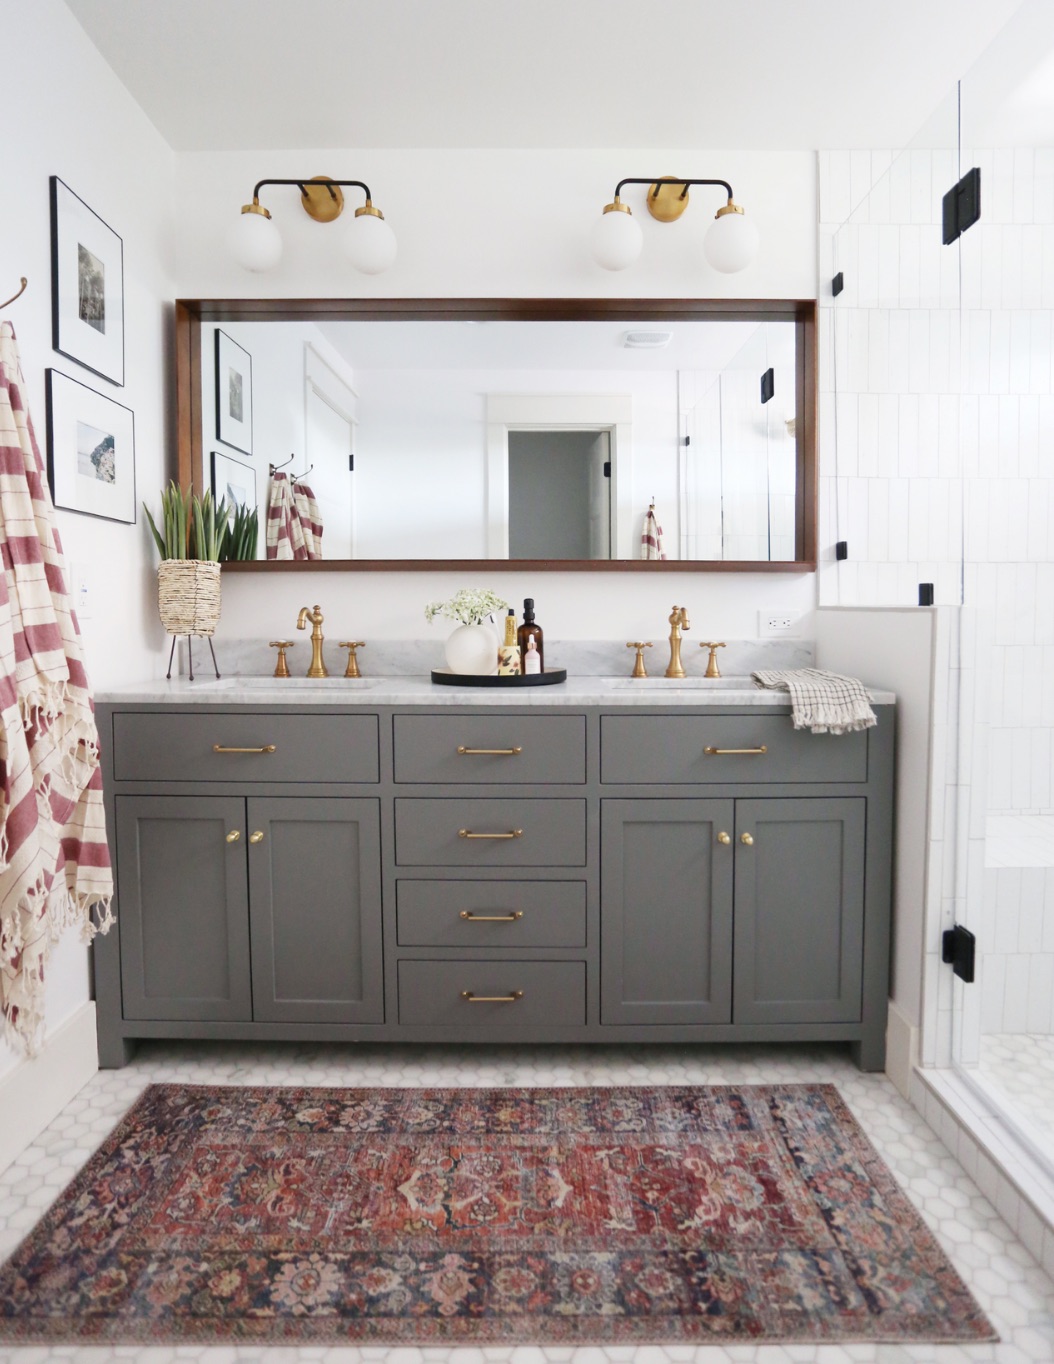 50+ Master bathroom ideas - double vanities, showers and makeup areas